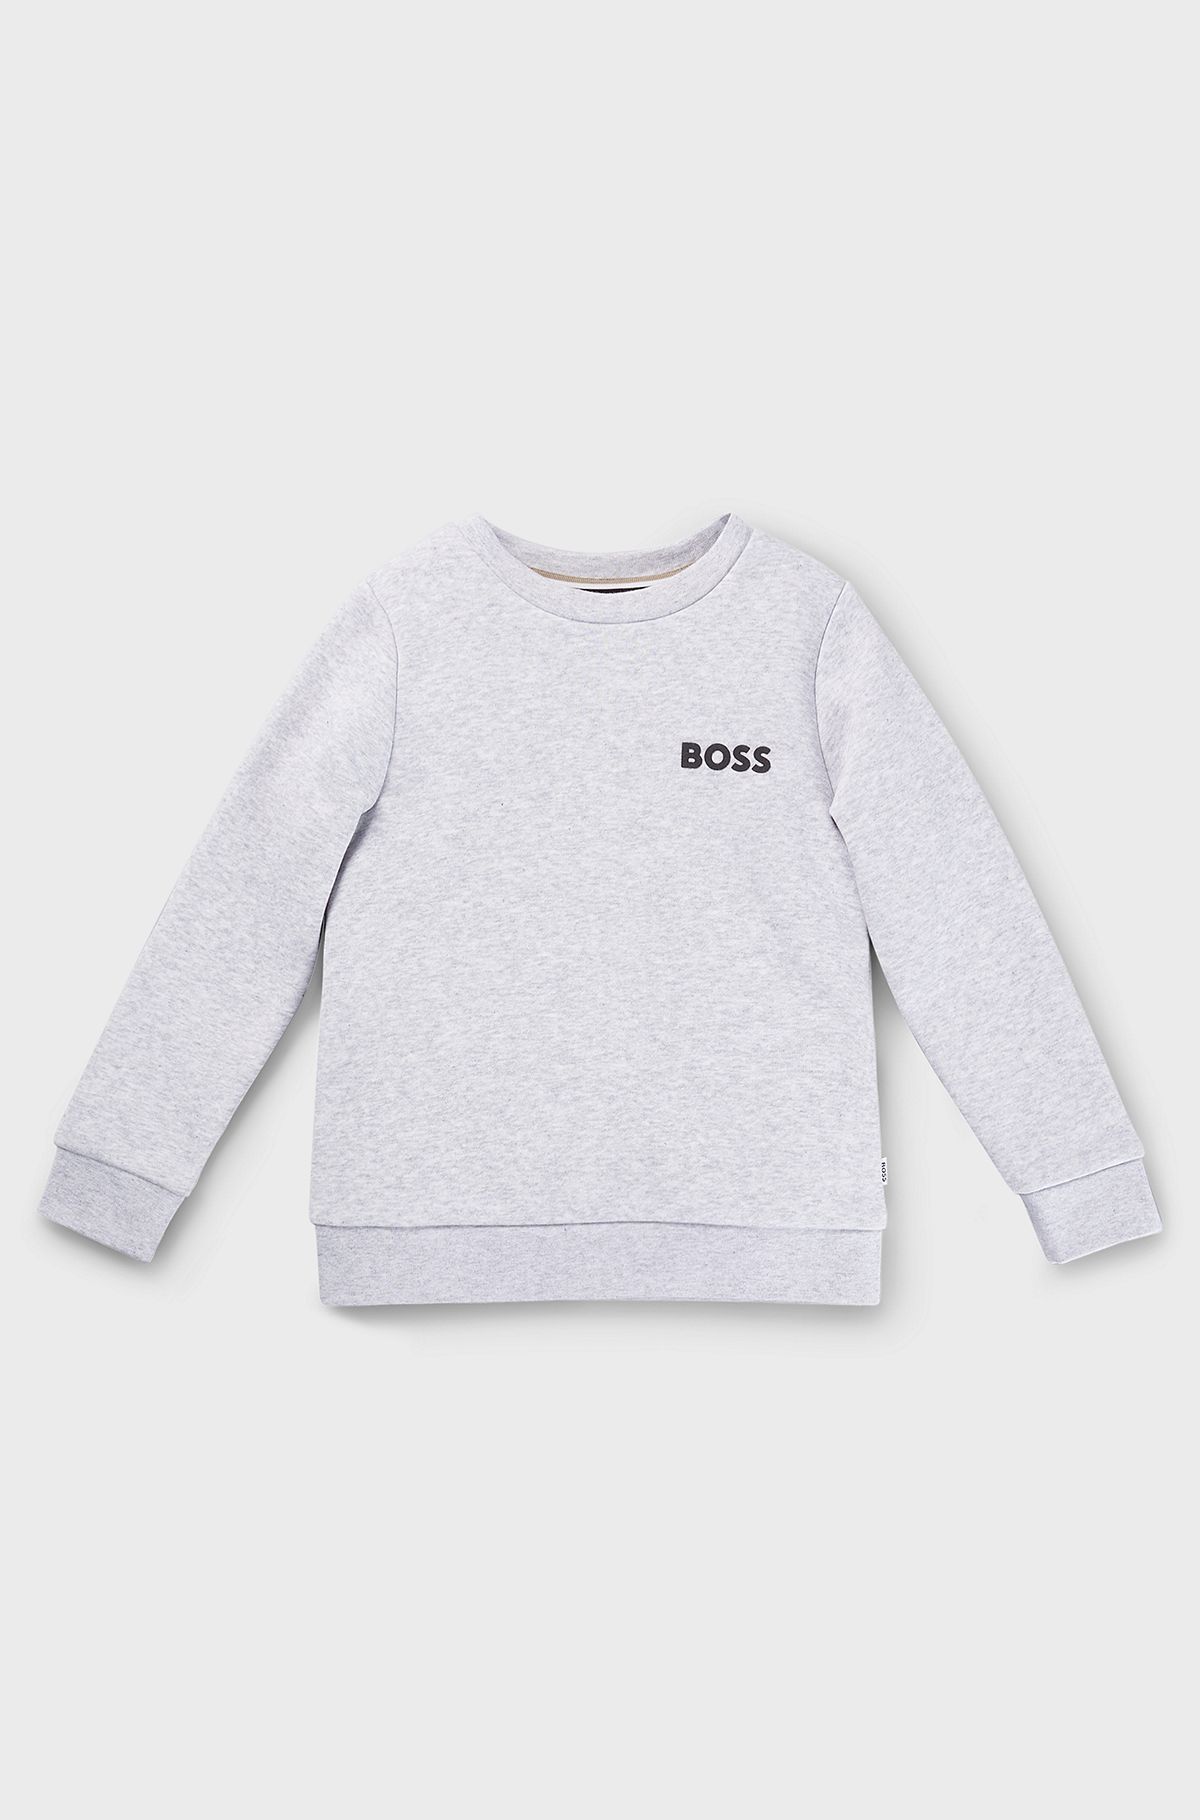 Kids' cotton-blend sweatshirt with logo print, Light Grey